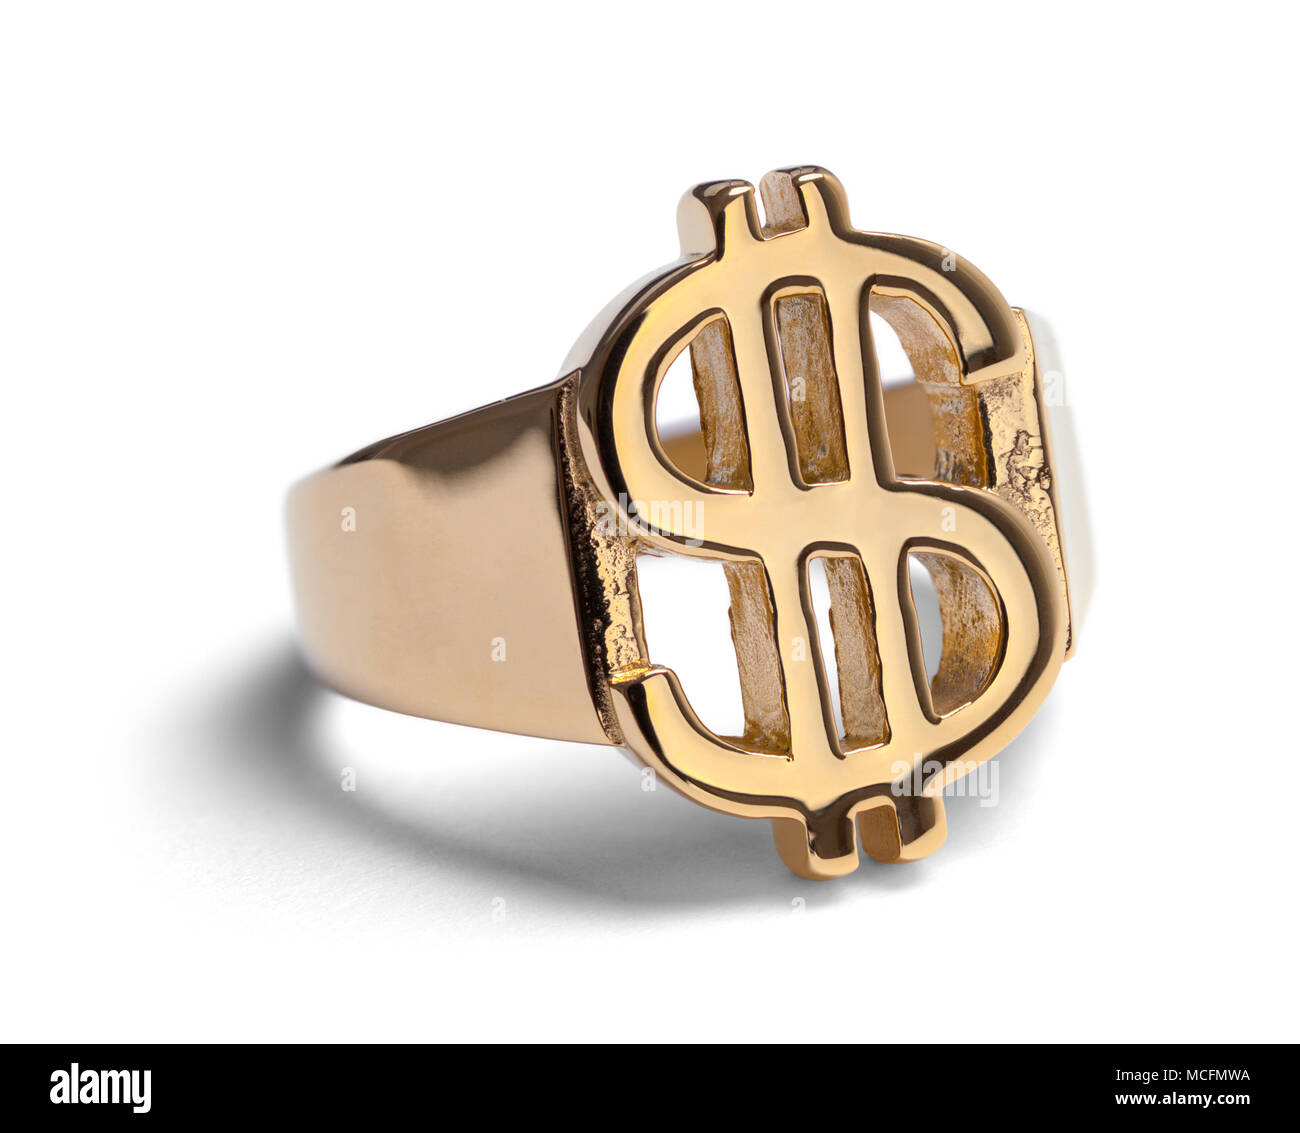 Gold Money Symbol Ring Isolated on a White Background. Stock Photo